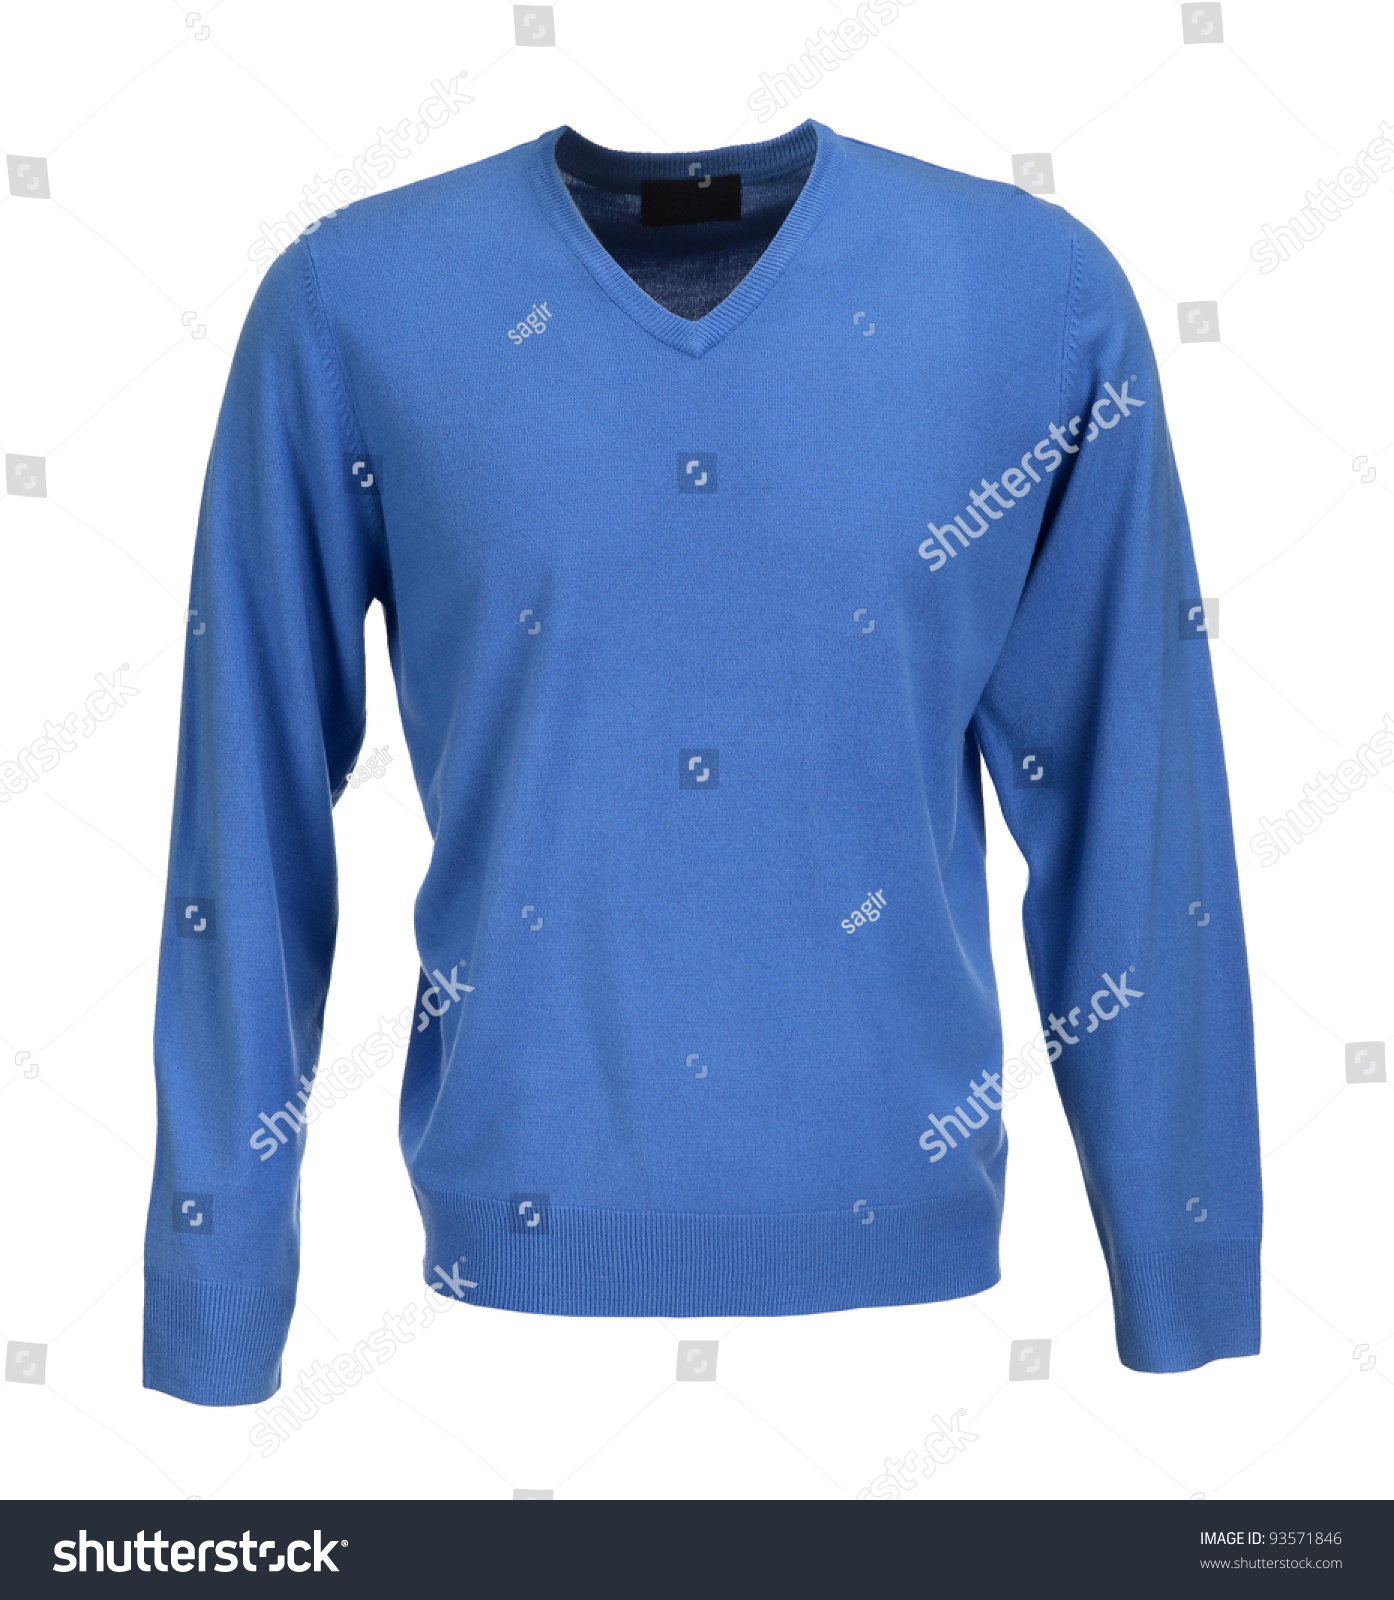 Blue Sweater Isolated On White Background Stock Photo 93571846 ...